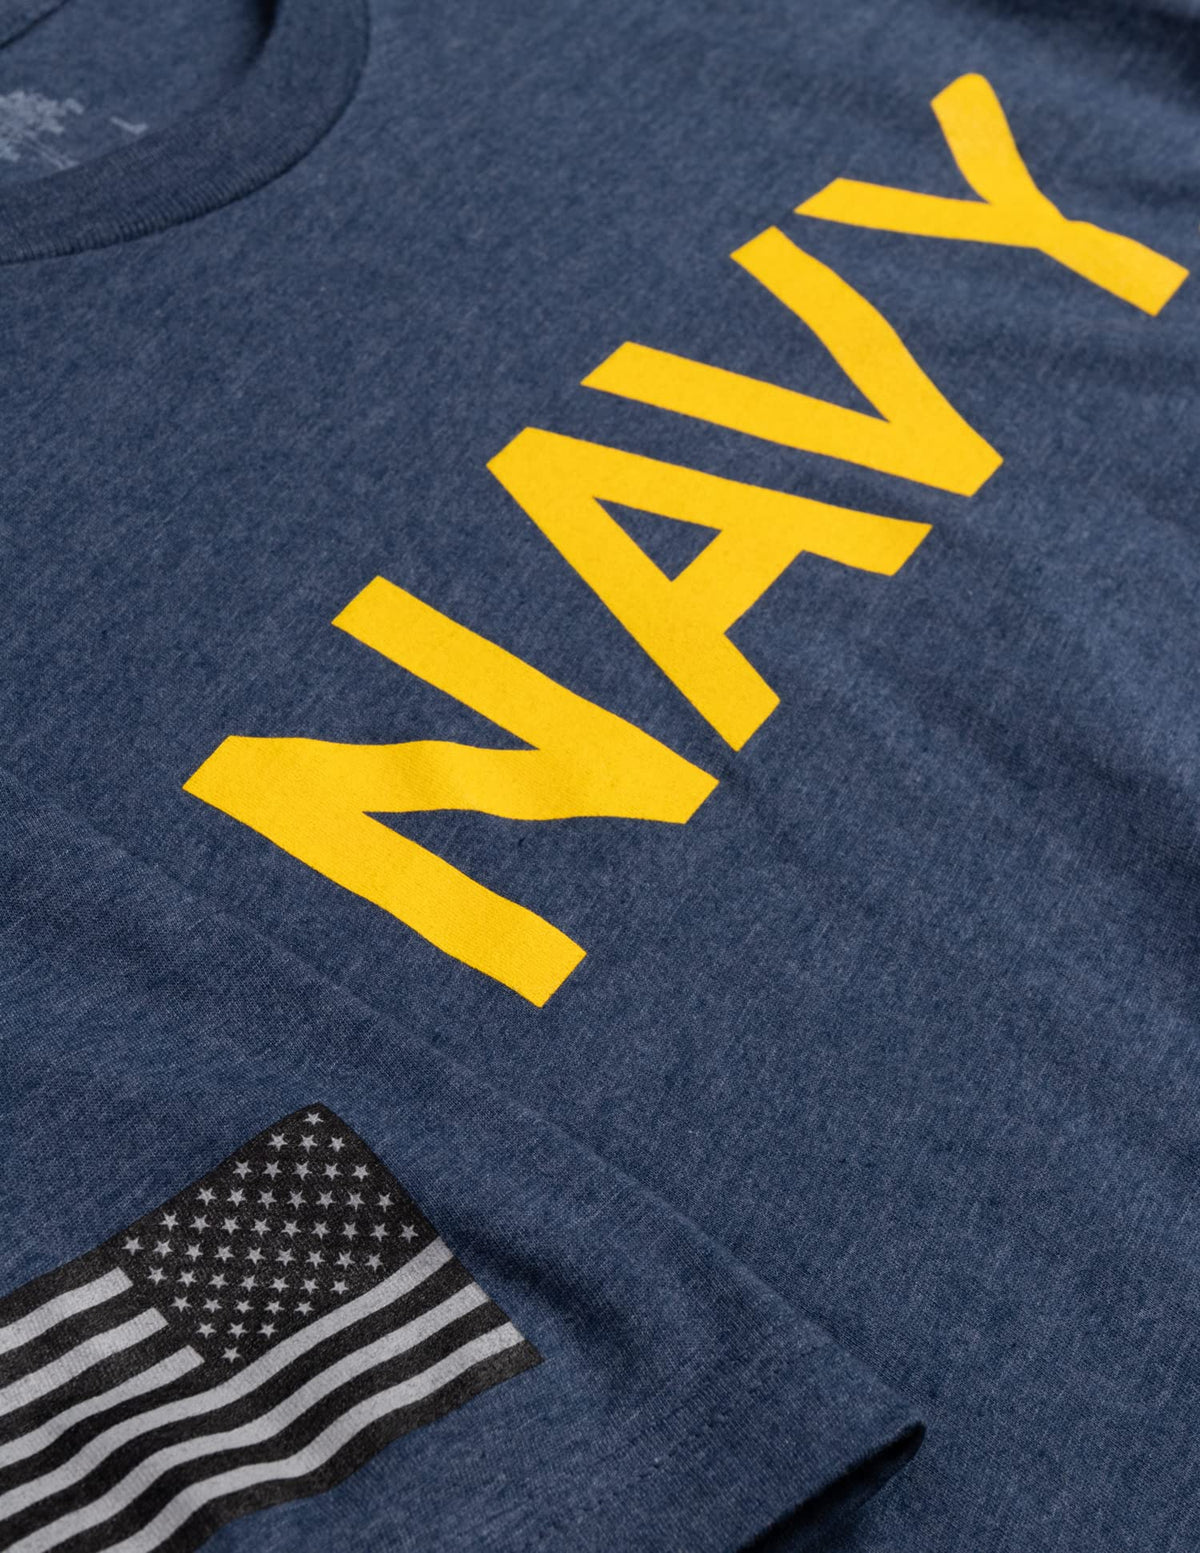 USS Oregon, SSN-793 | U.S. Navy Sailor Veteran USN United States Naval T-shirt for Men Women